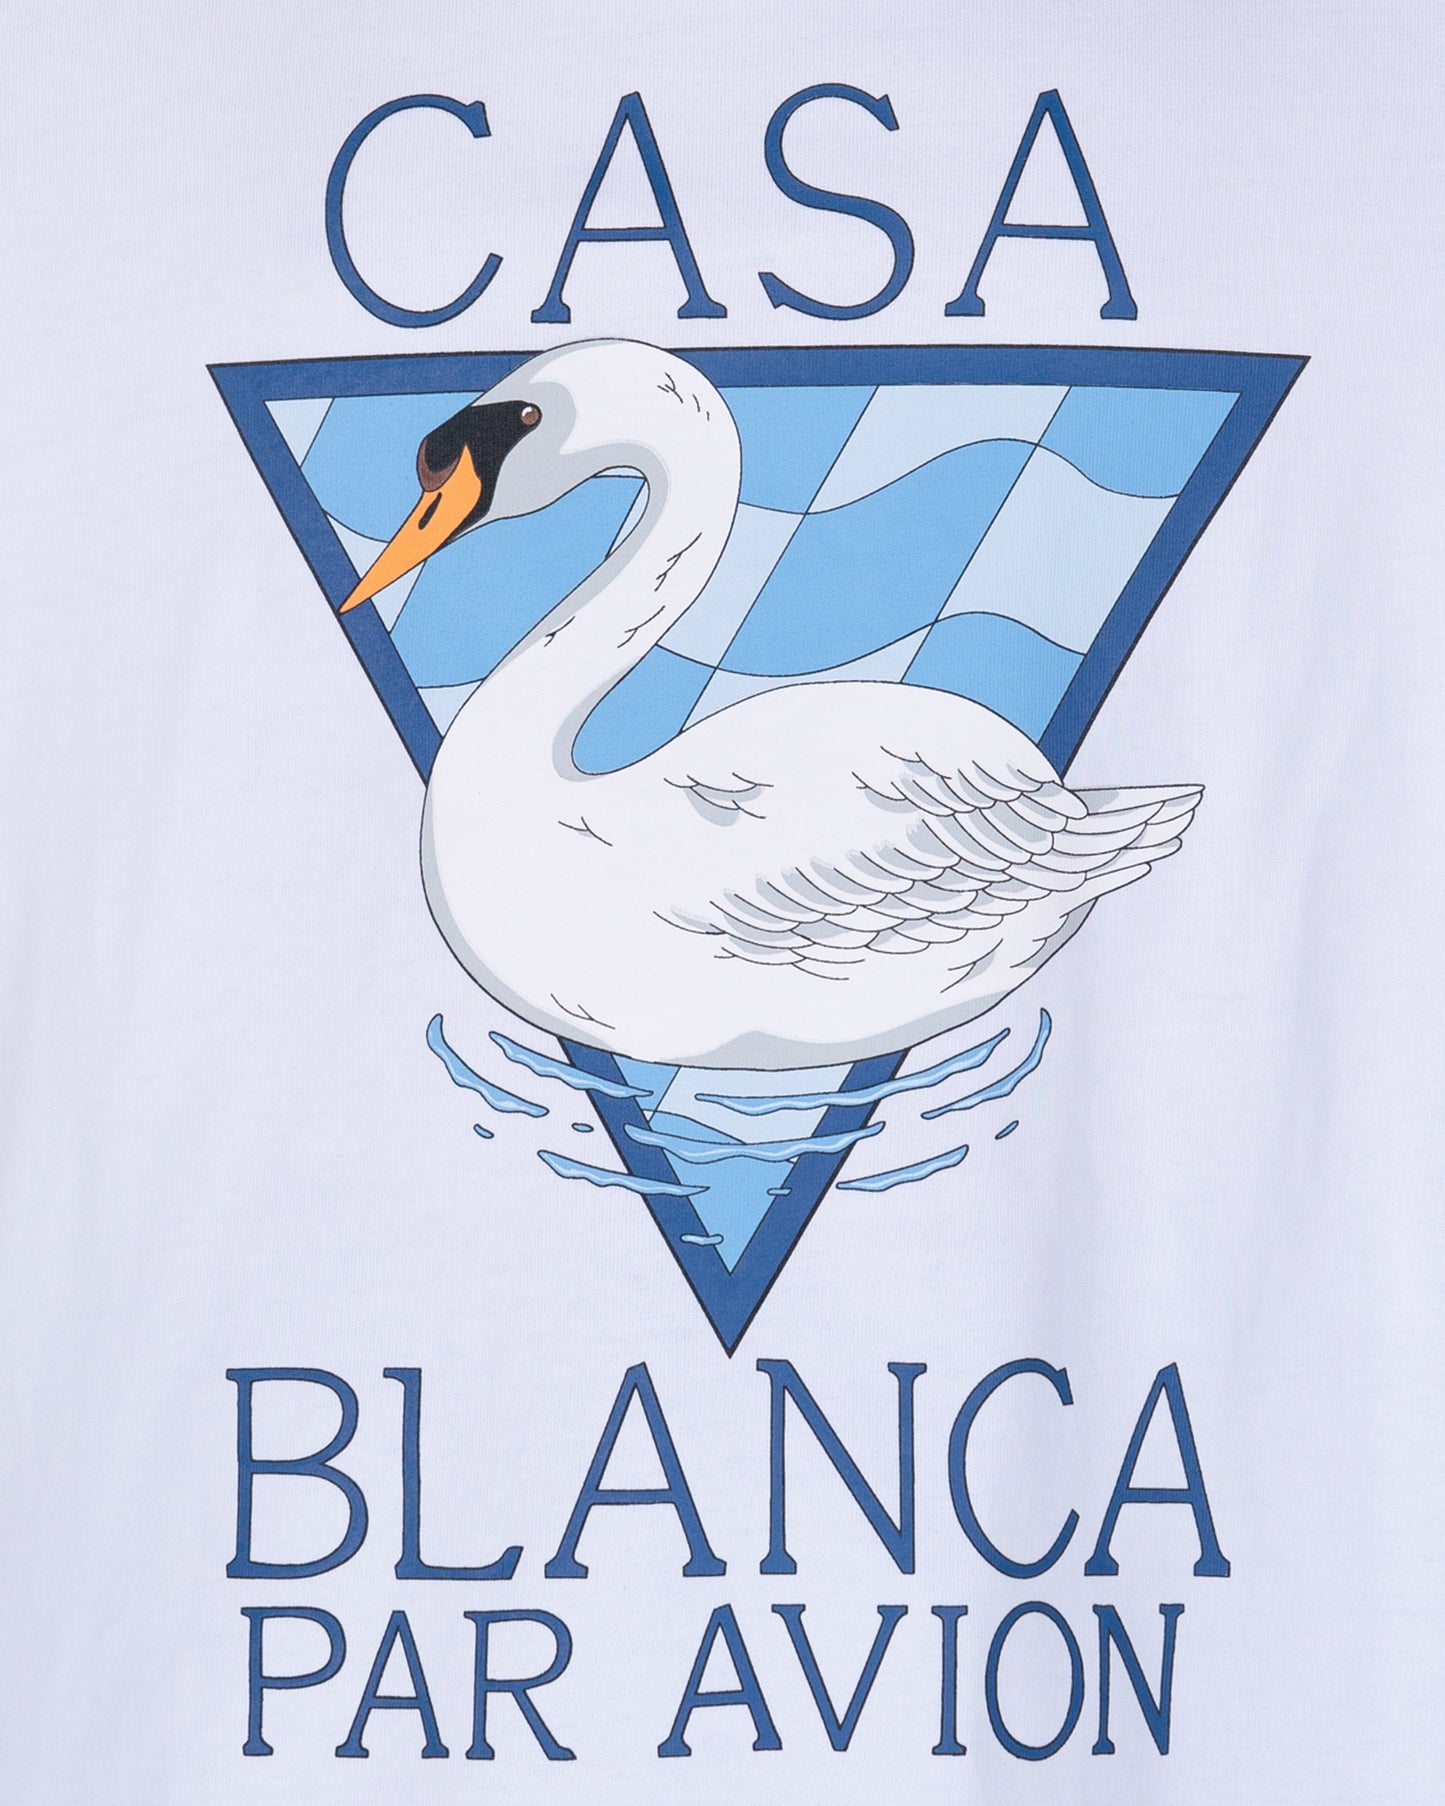 Casablanca Mens T-Shirt Casablanca Par Avion T-Shirt in White